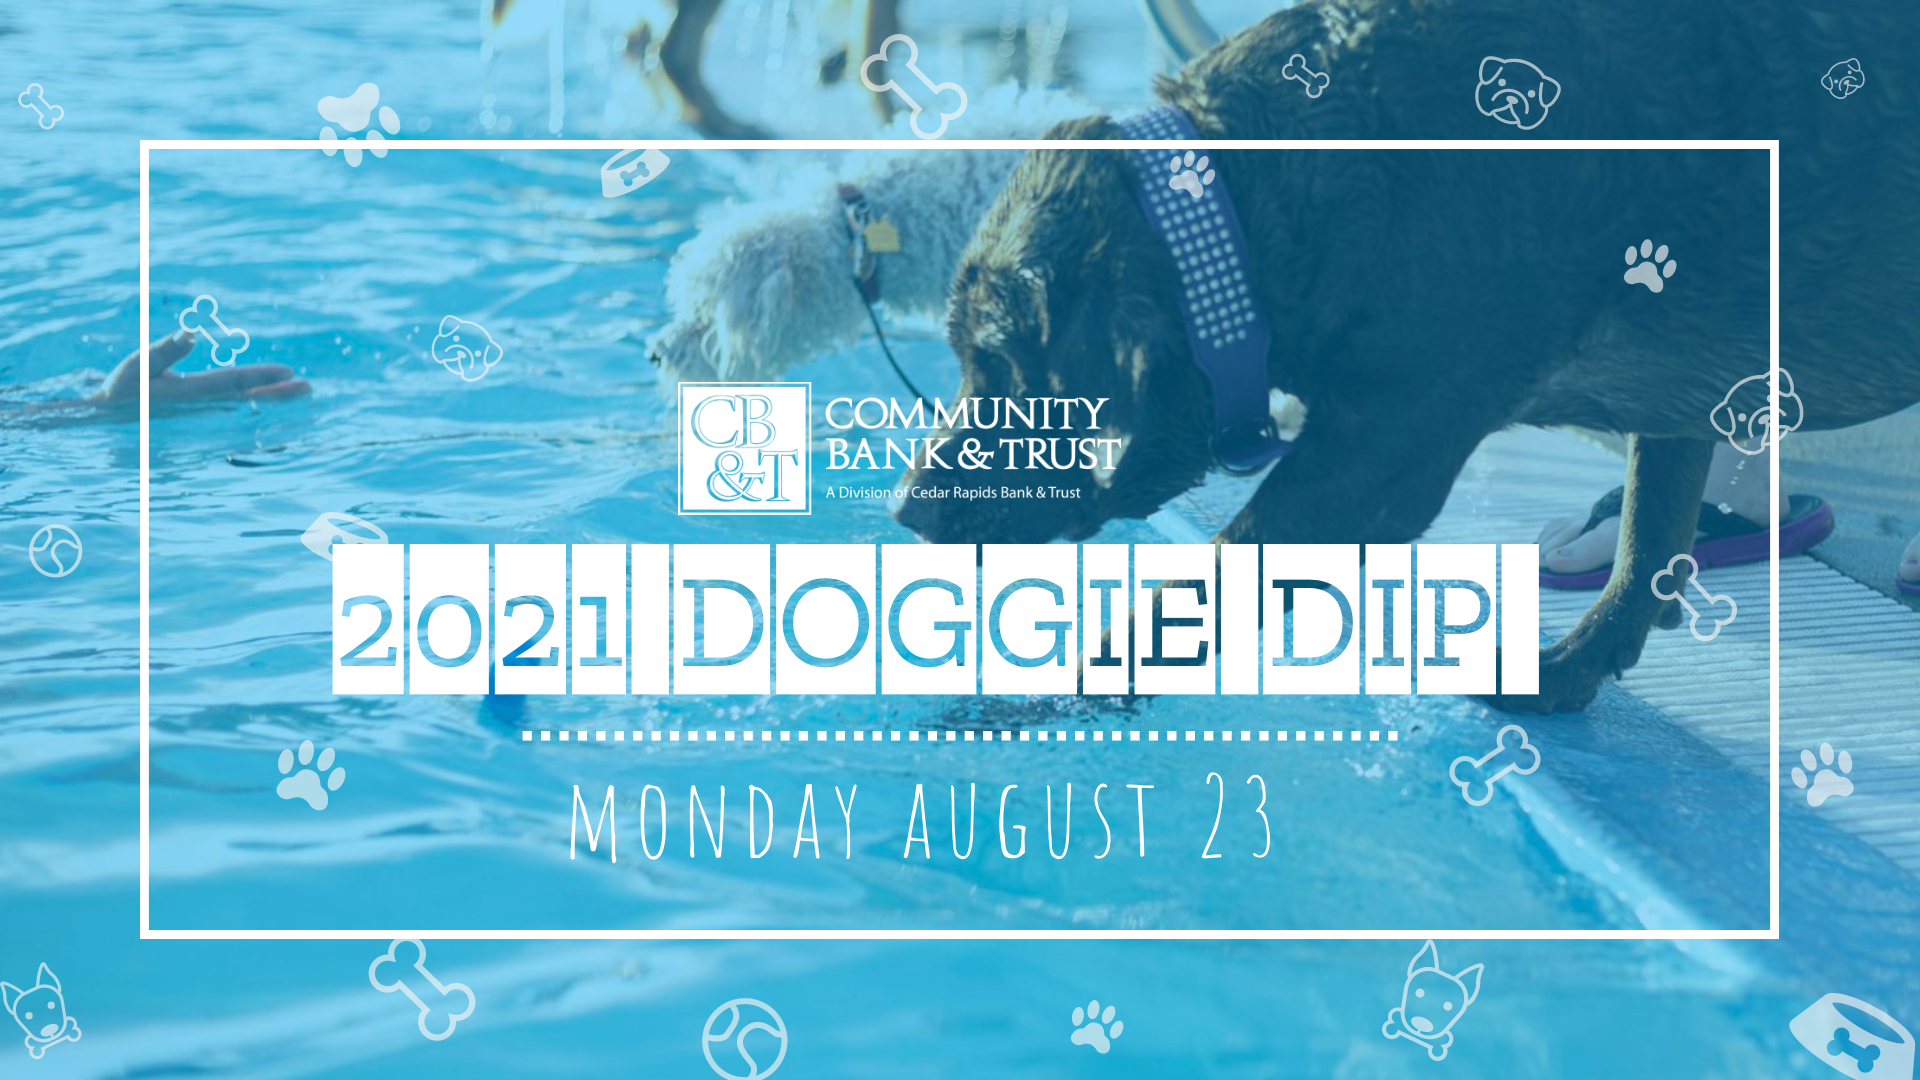 Doggie dip event cover photo 2021